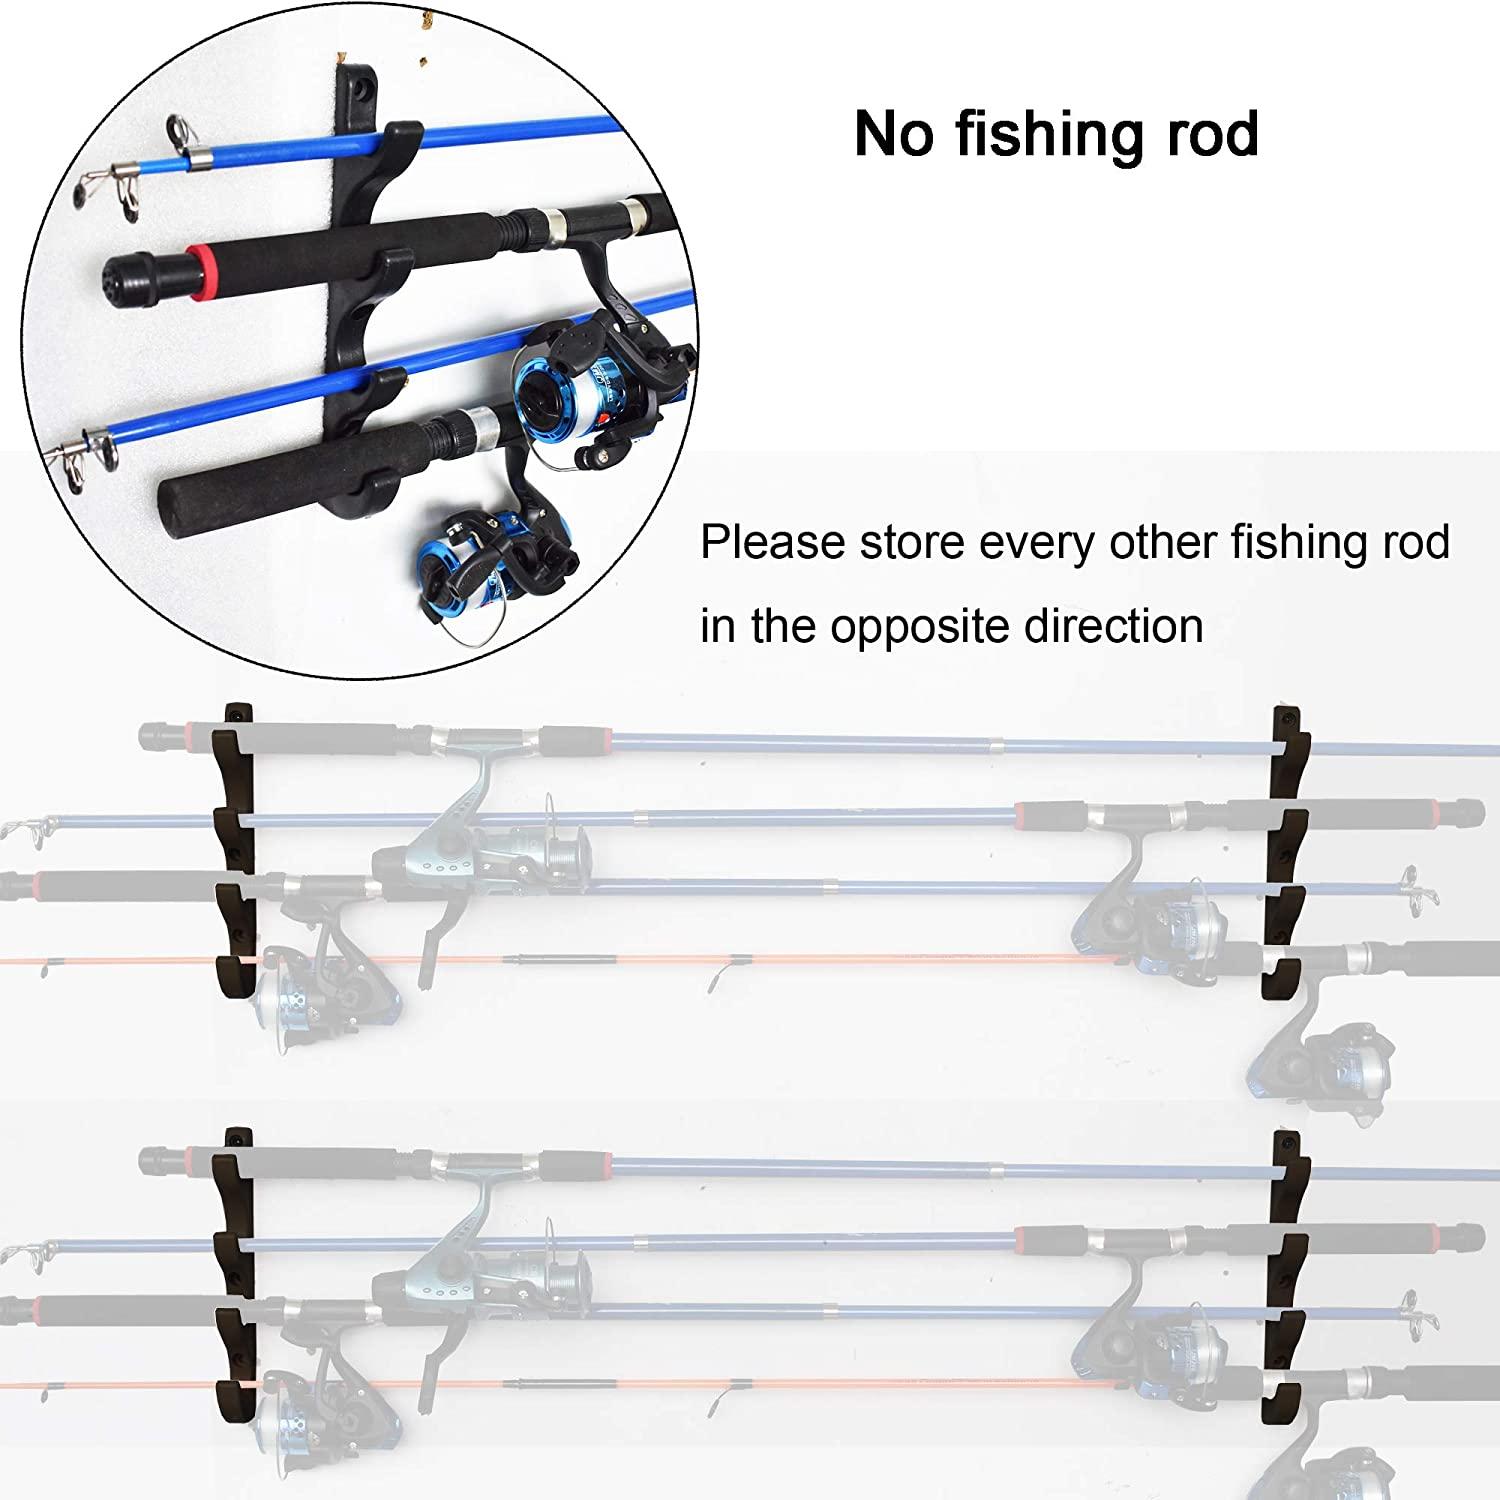 YYST Horizontal Fishing Rod Storage Rack Holder Wall Mount W Screws - No Fishing  Rod- to Hold 8 Fishing Rods